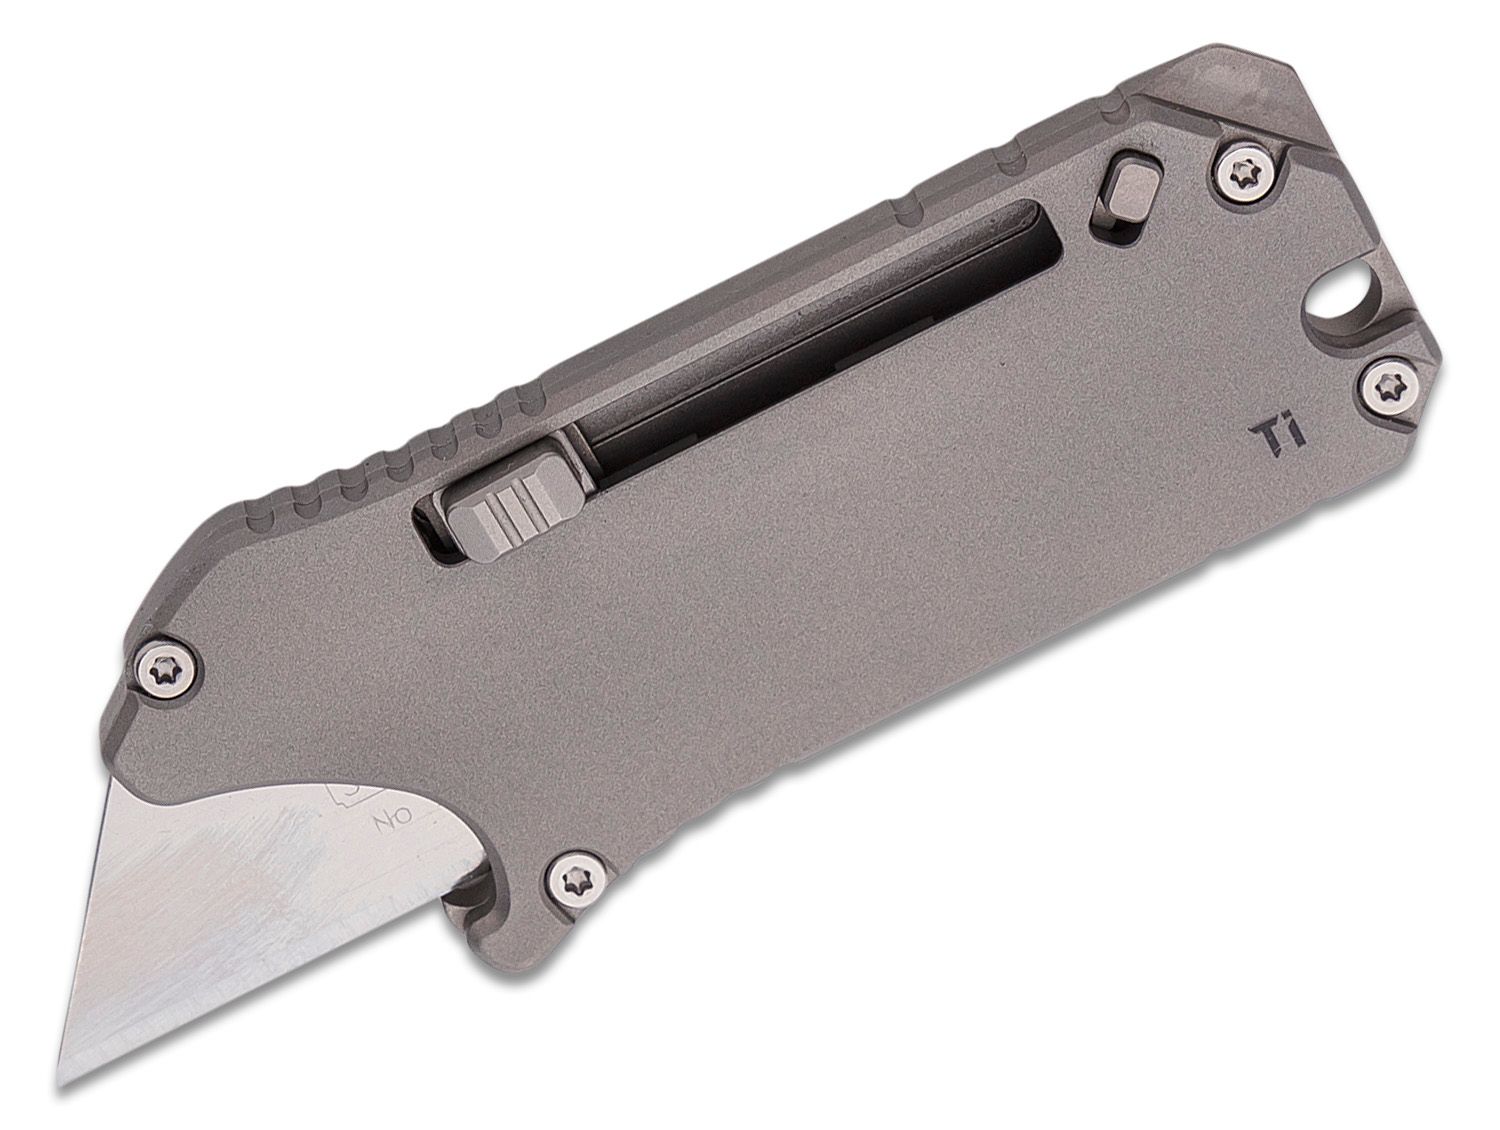 OKNIFE Otacle Retractable Utility Knife, Box Opener Razor Knife